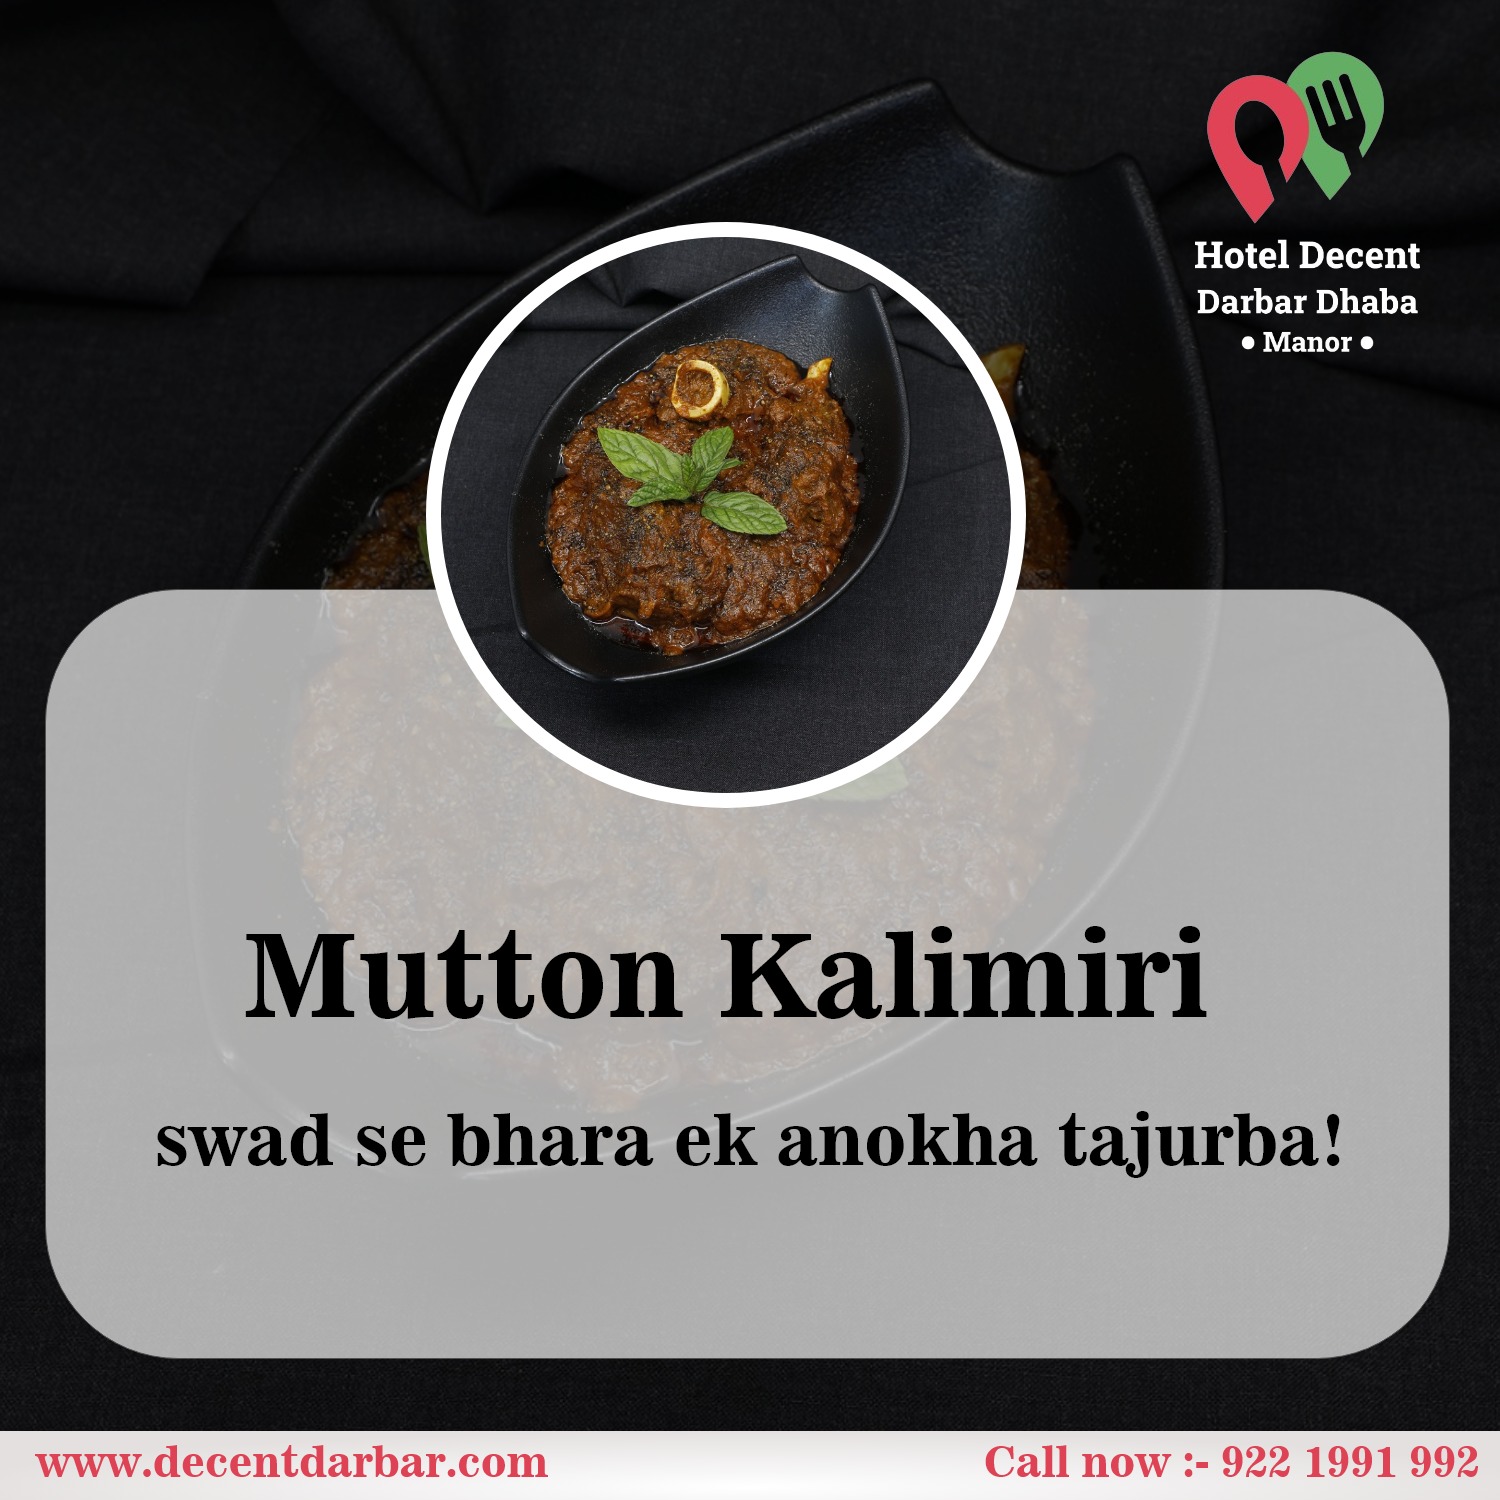 Our signature Mutton Kalimiri